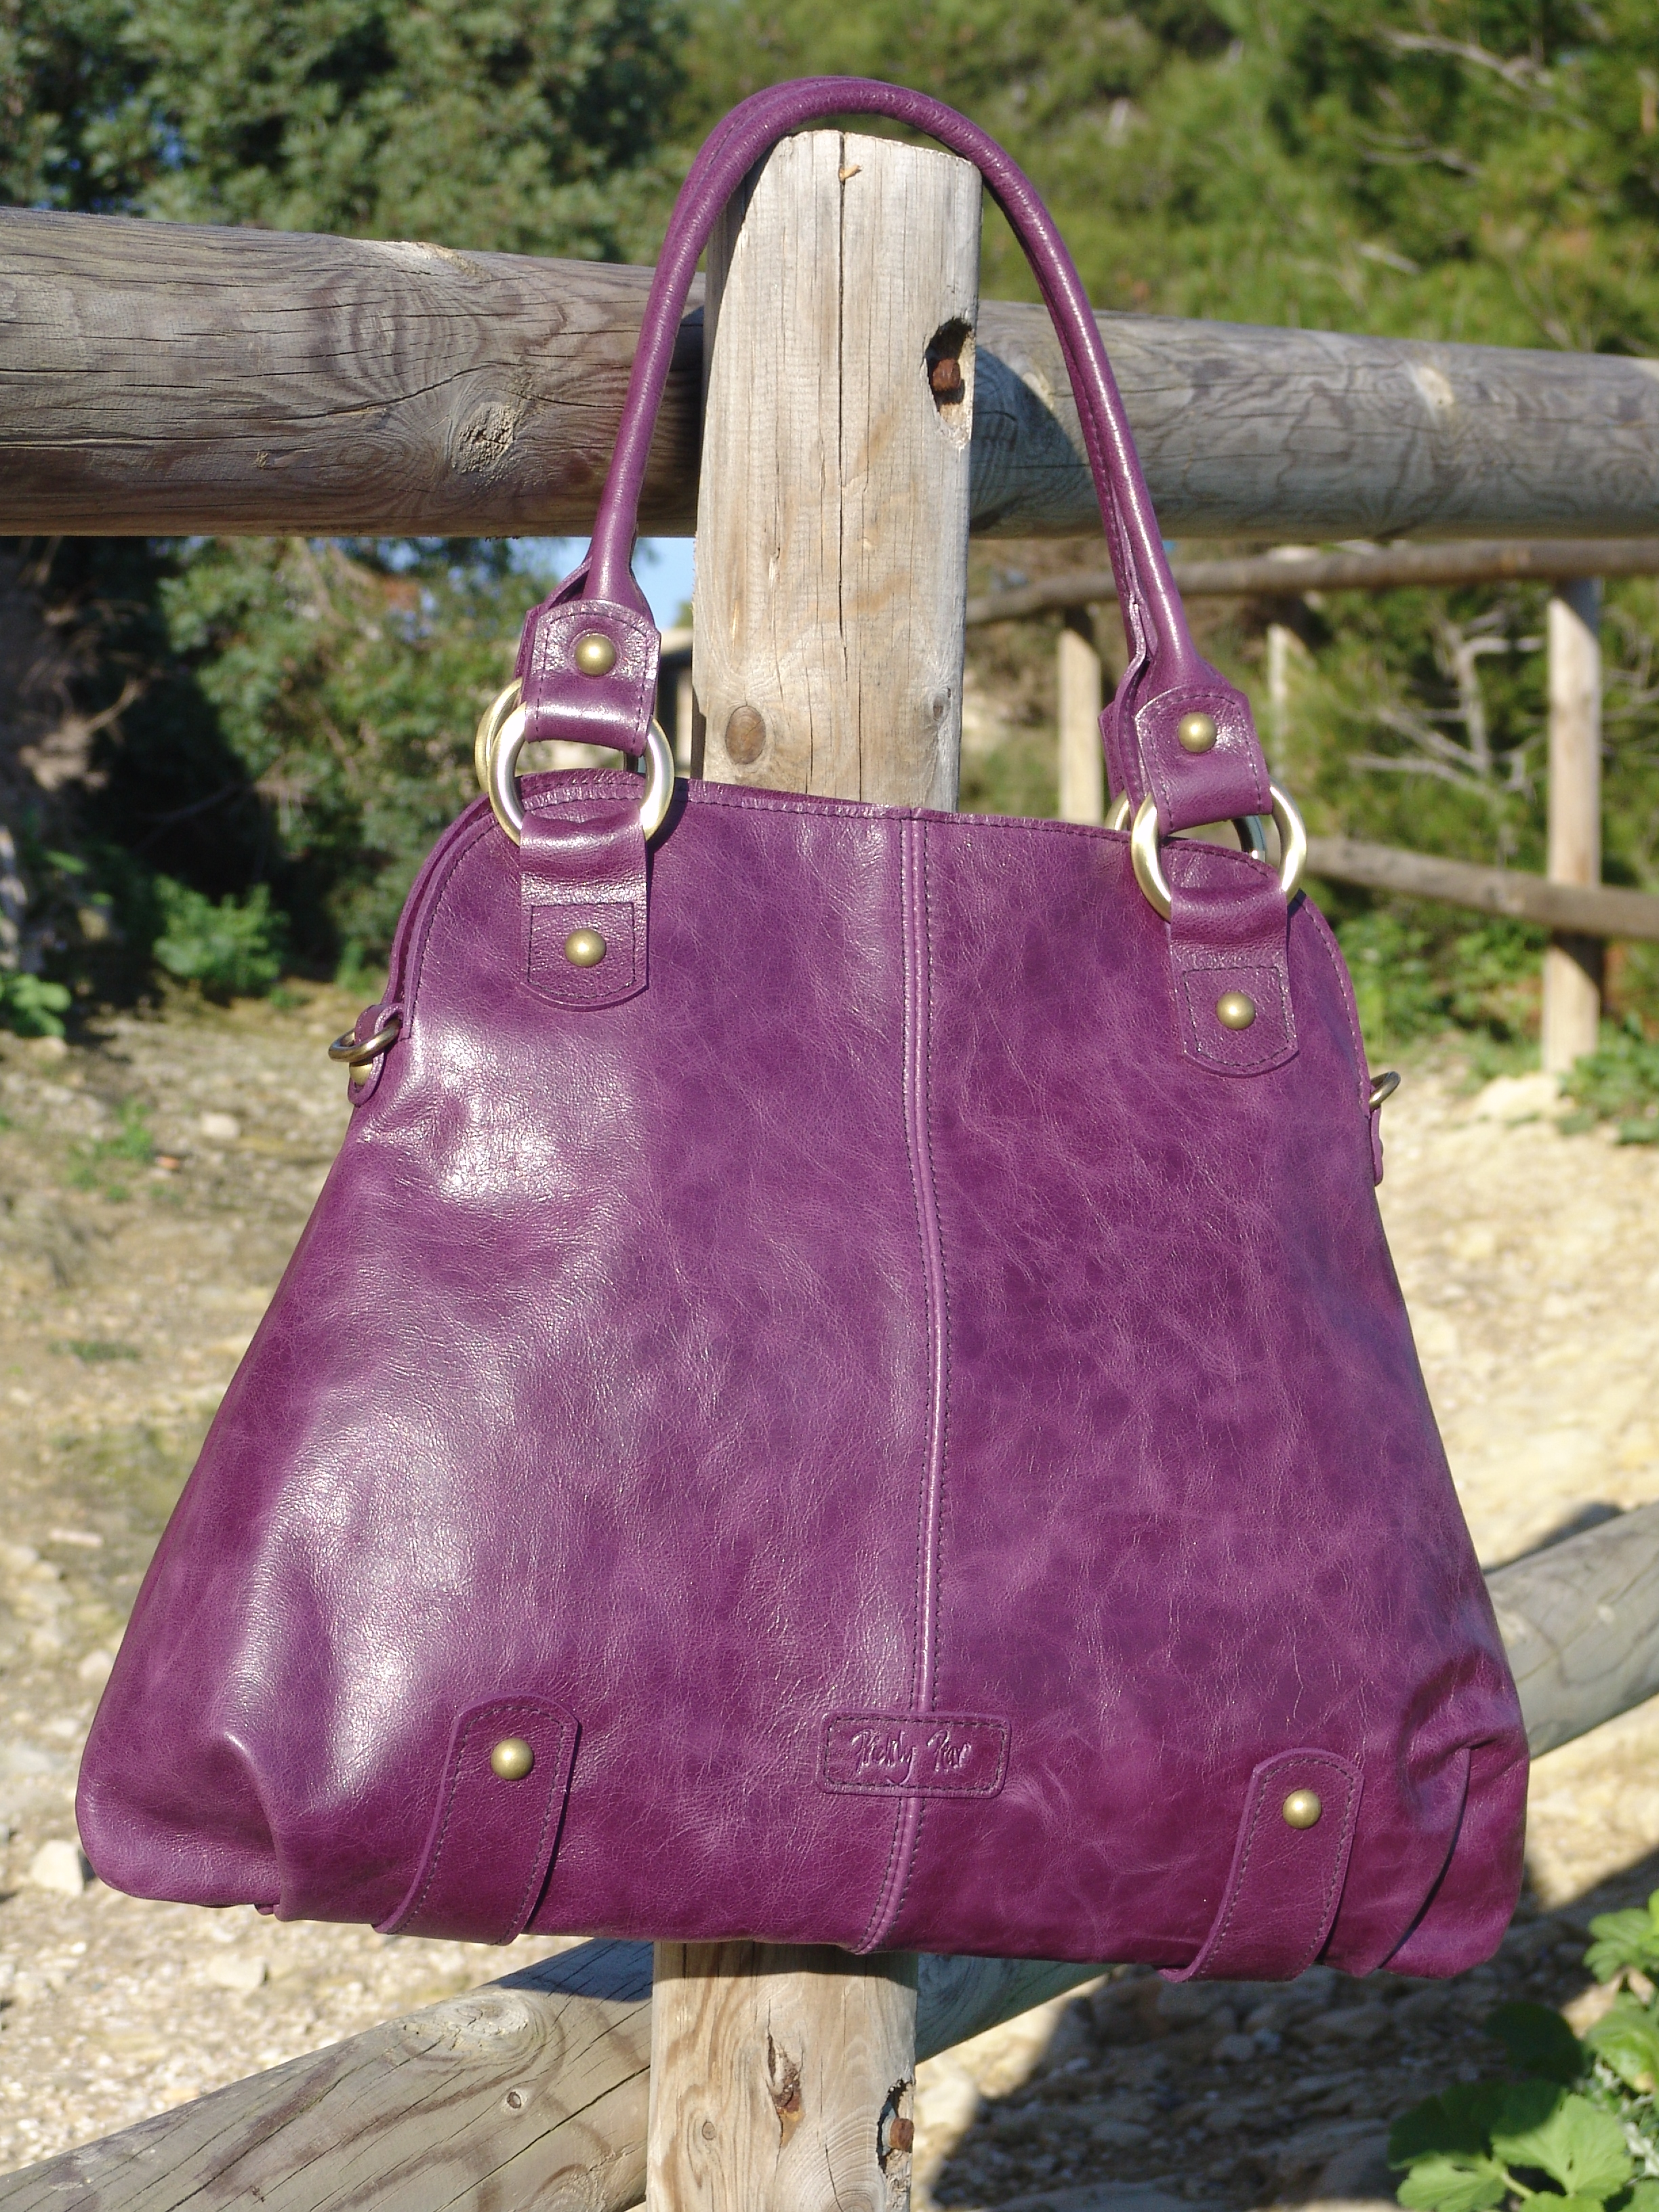 Handbags online: Purple Leather handbags in Toronto